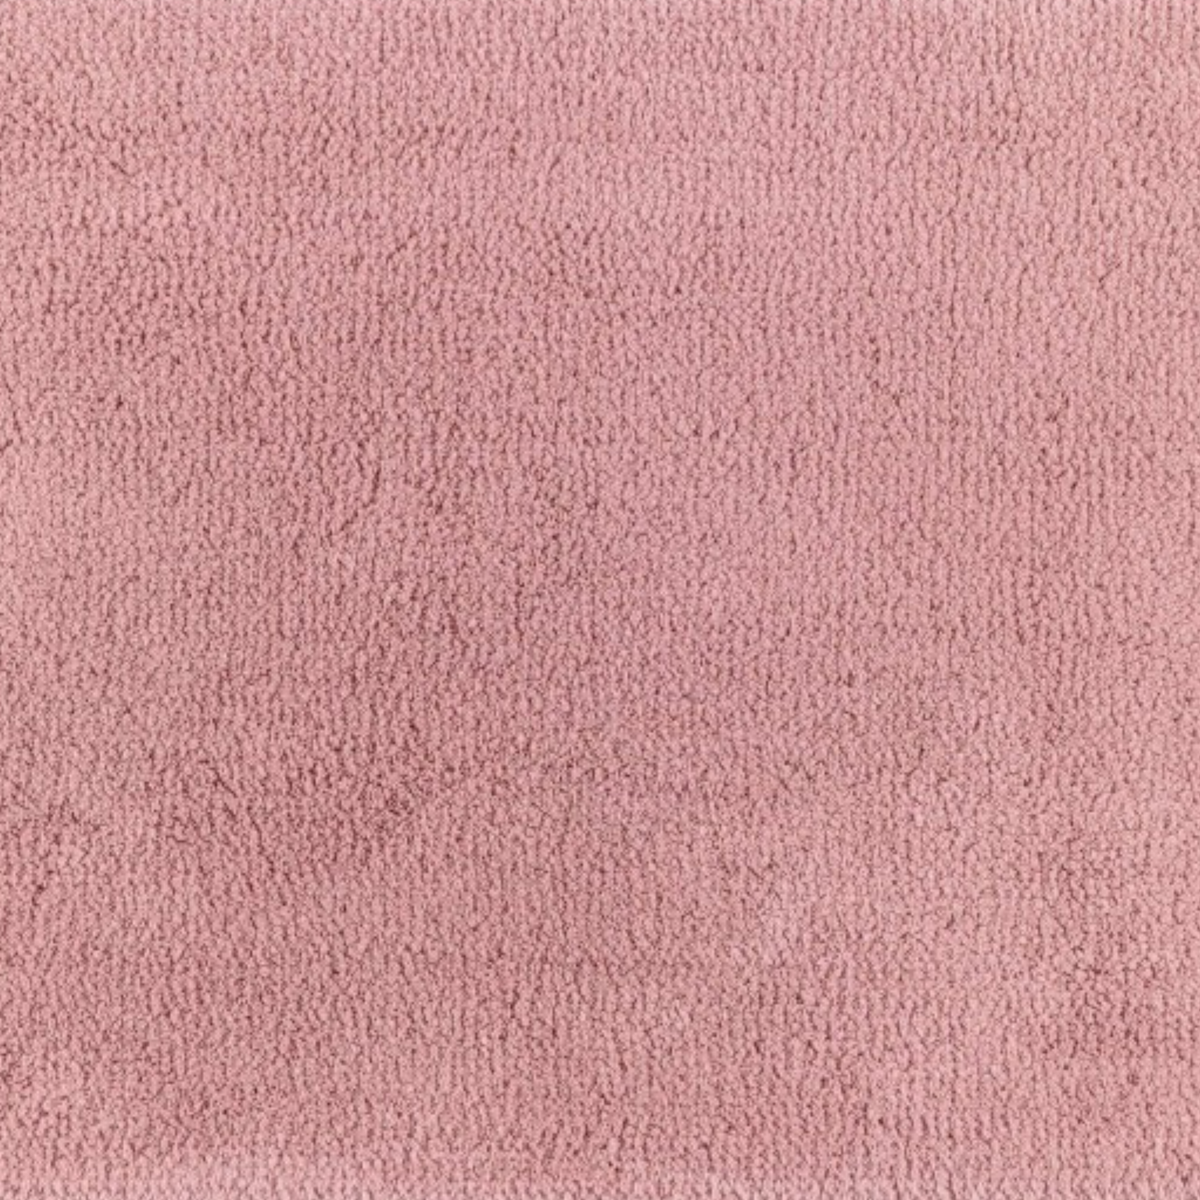 Fabric Closeup of Graccioza Cool Bath Rugs Blush Color